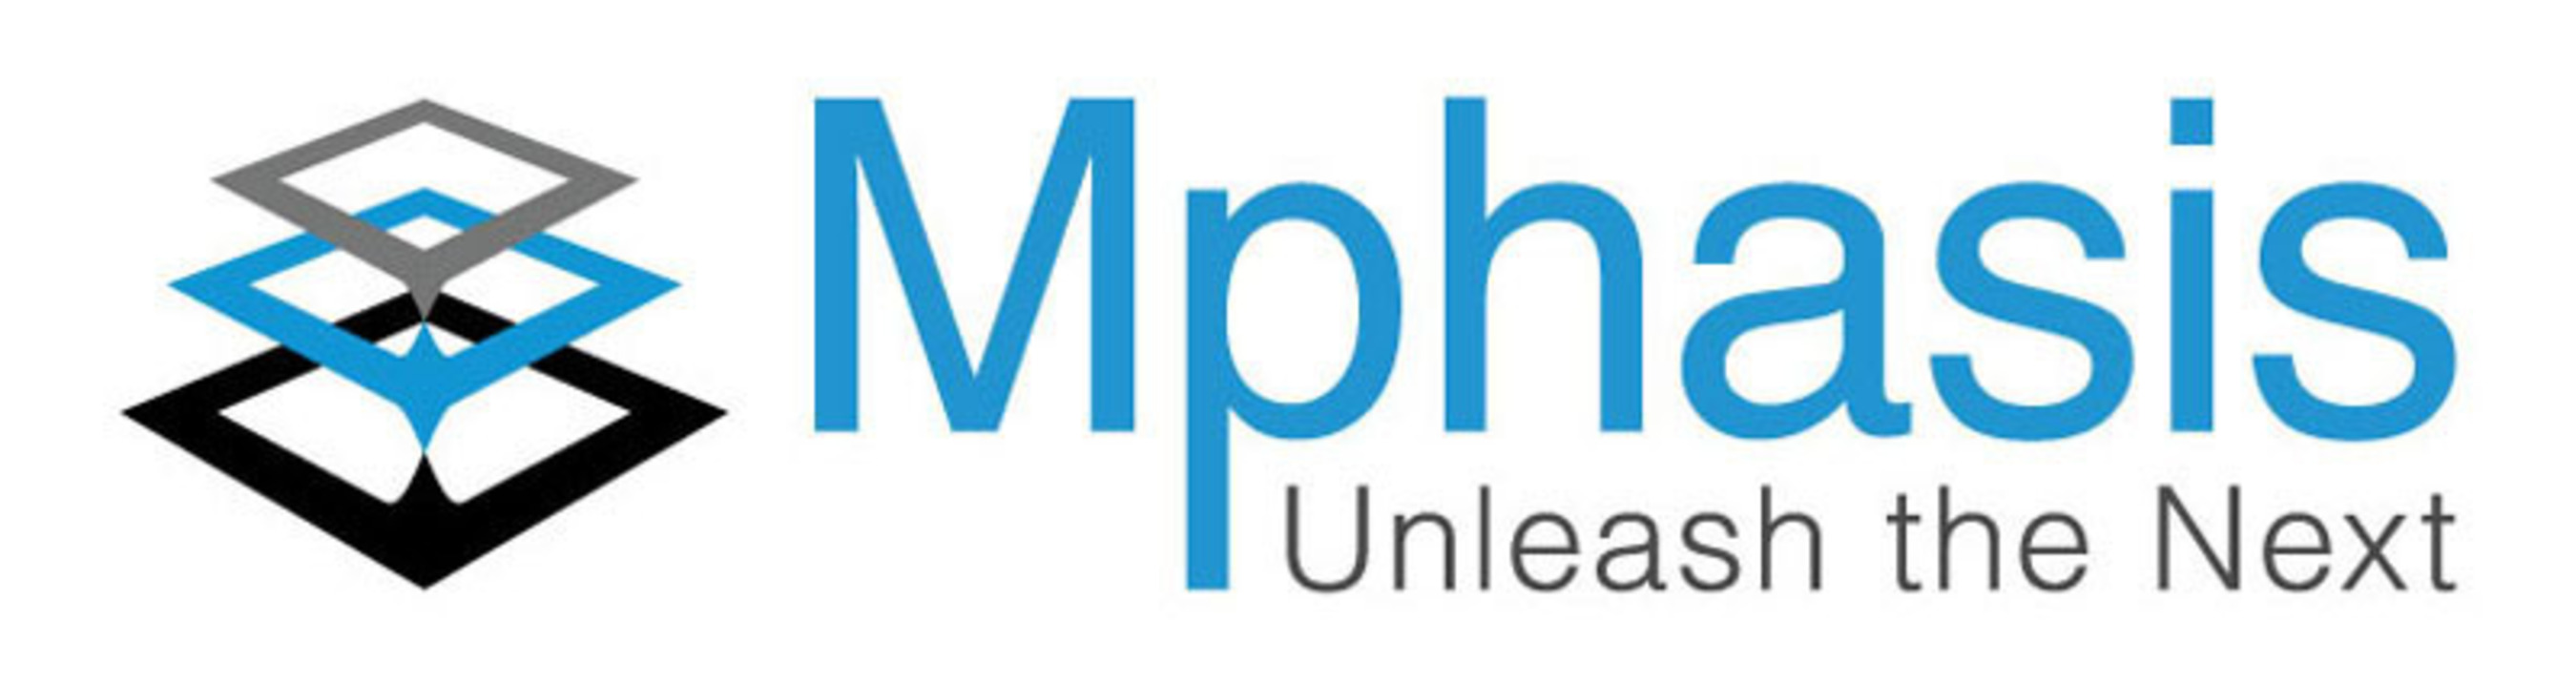 Mphasis, Unleash the Next. (PRNewsFoto/Mphasis) (PRNewsFoto/MPHASIS)